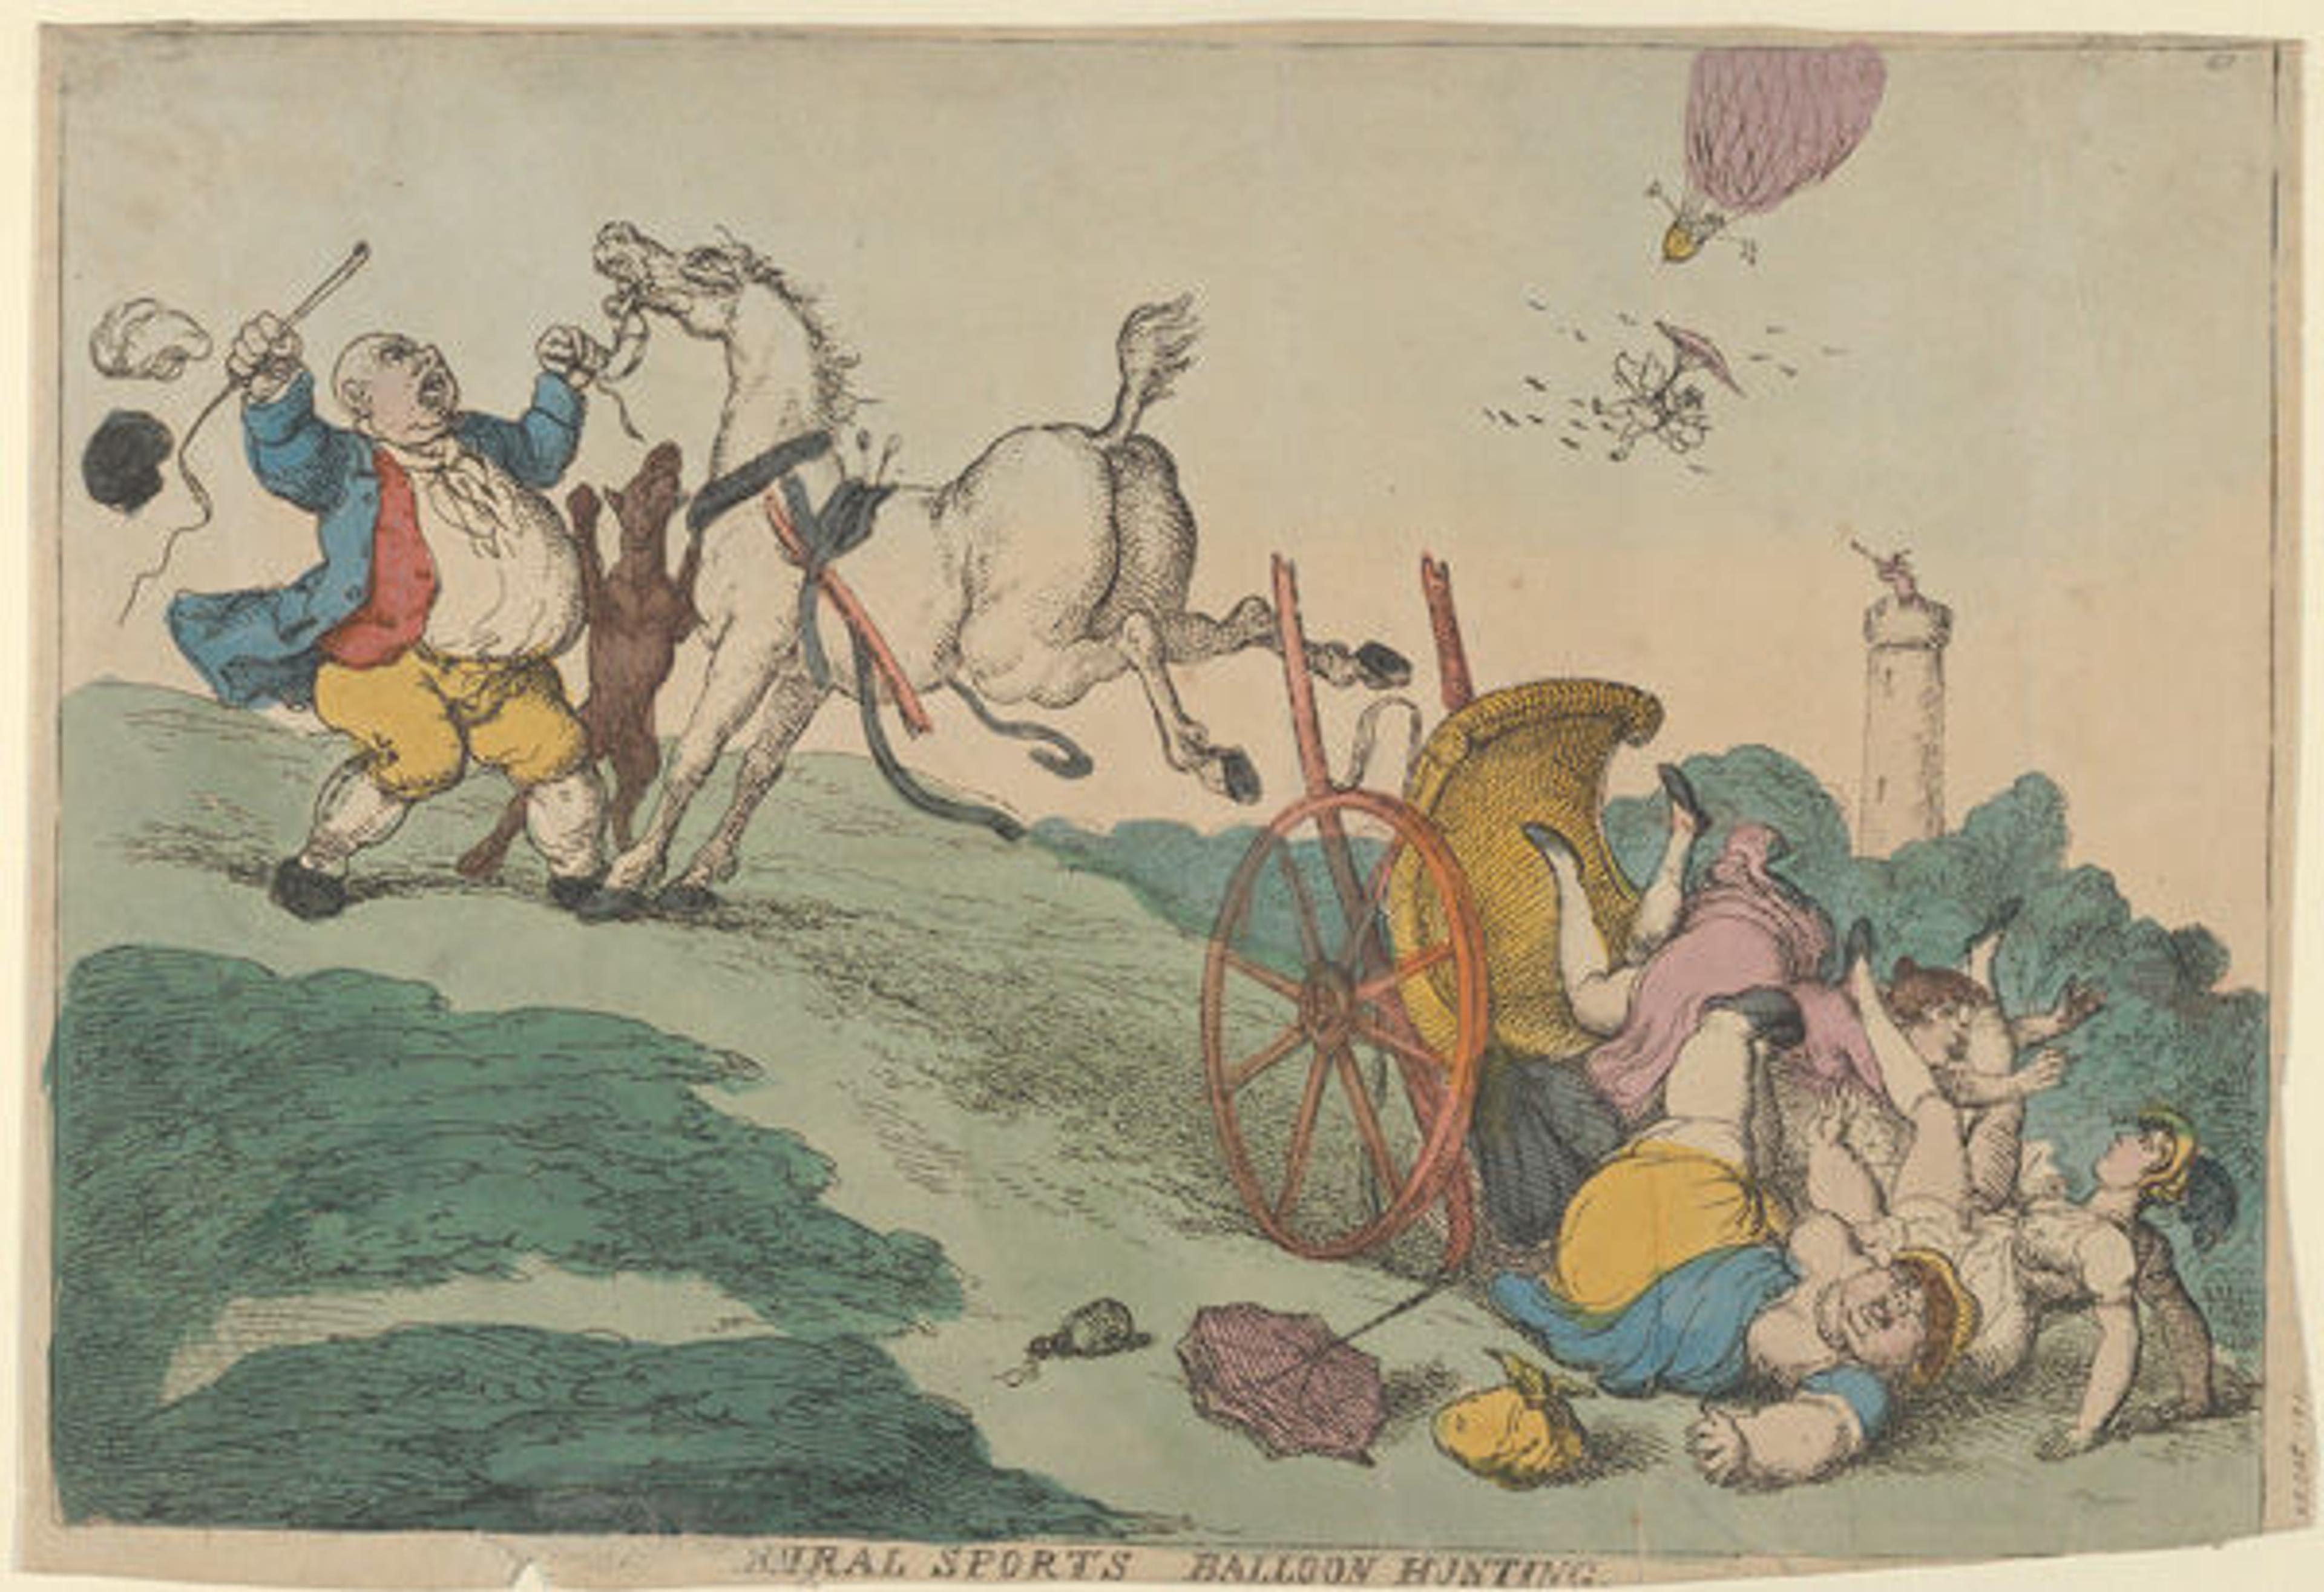 Thomas Rowlandson (1757–1827), Rural Sports: Balloon Hunting